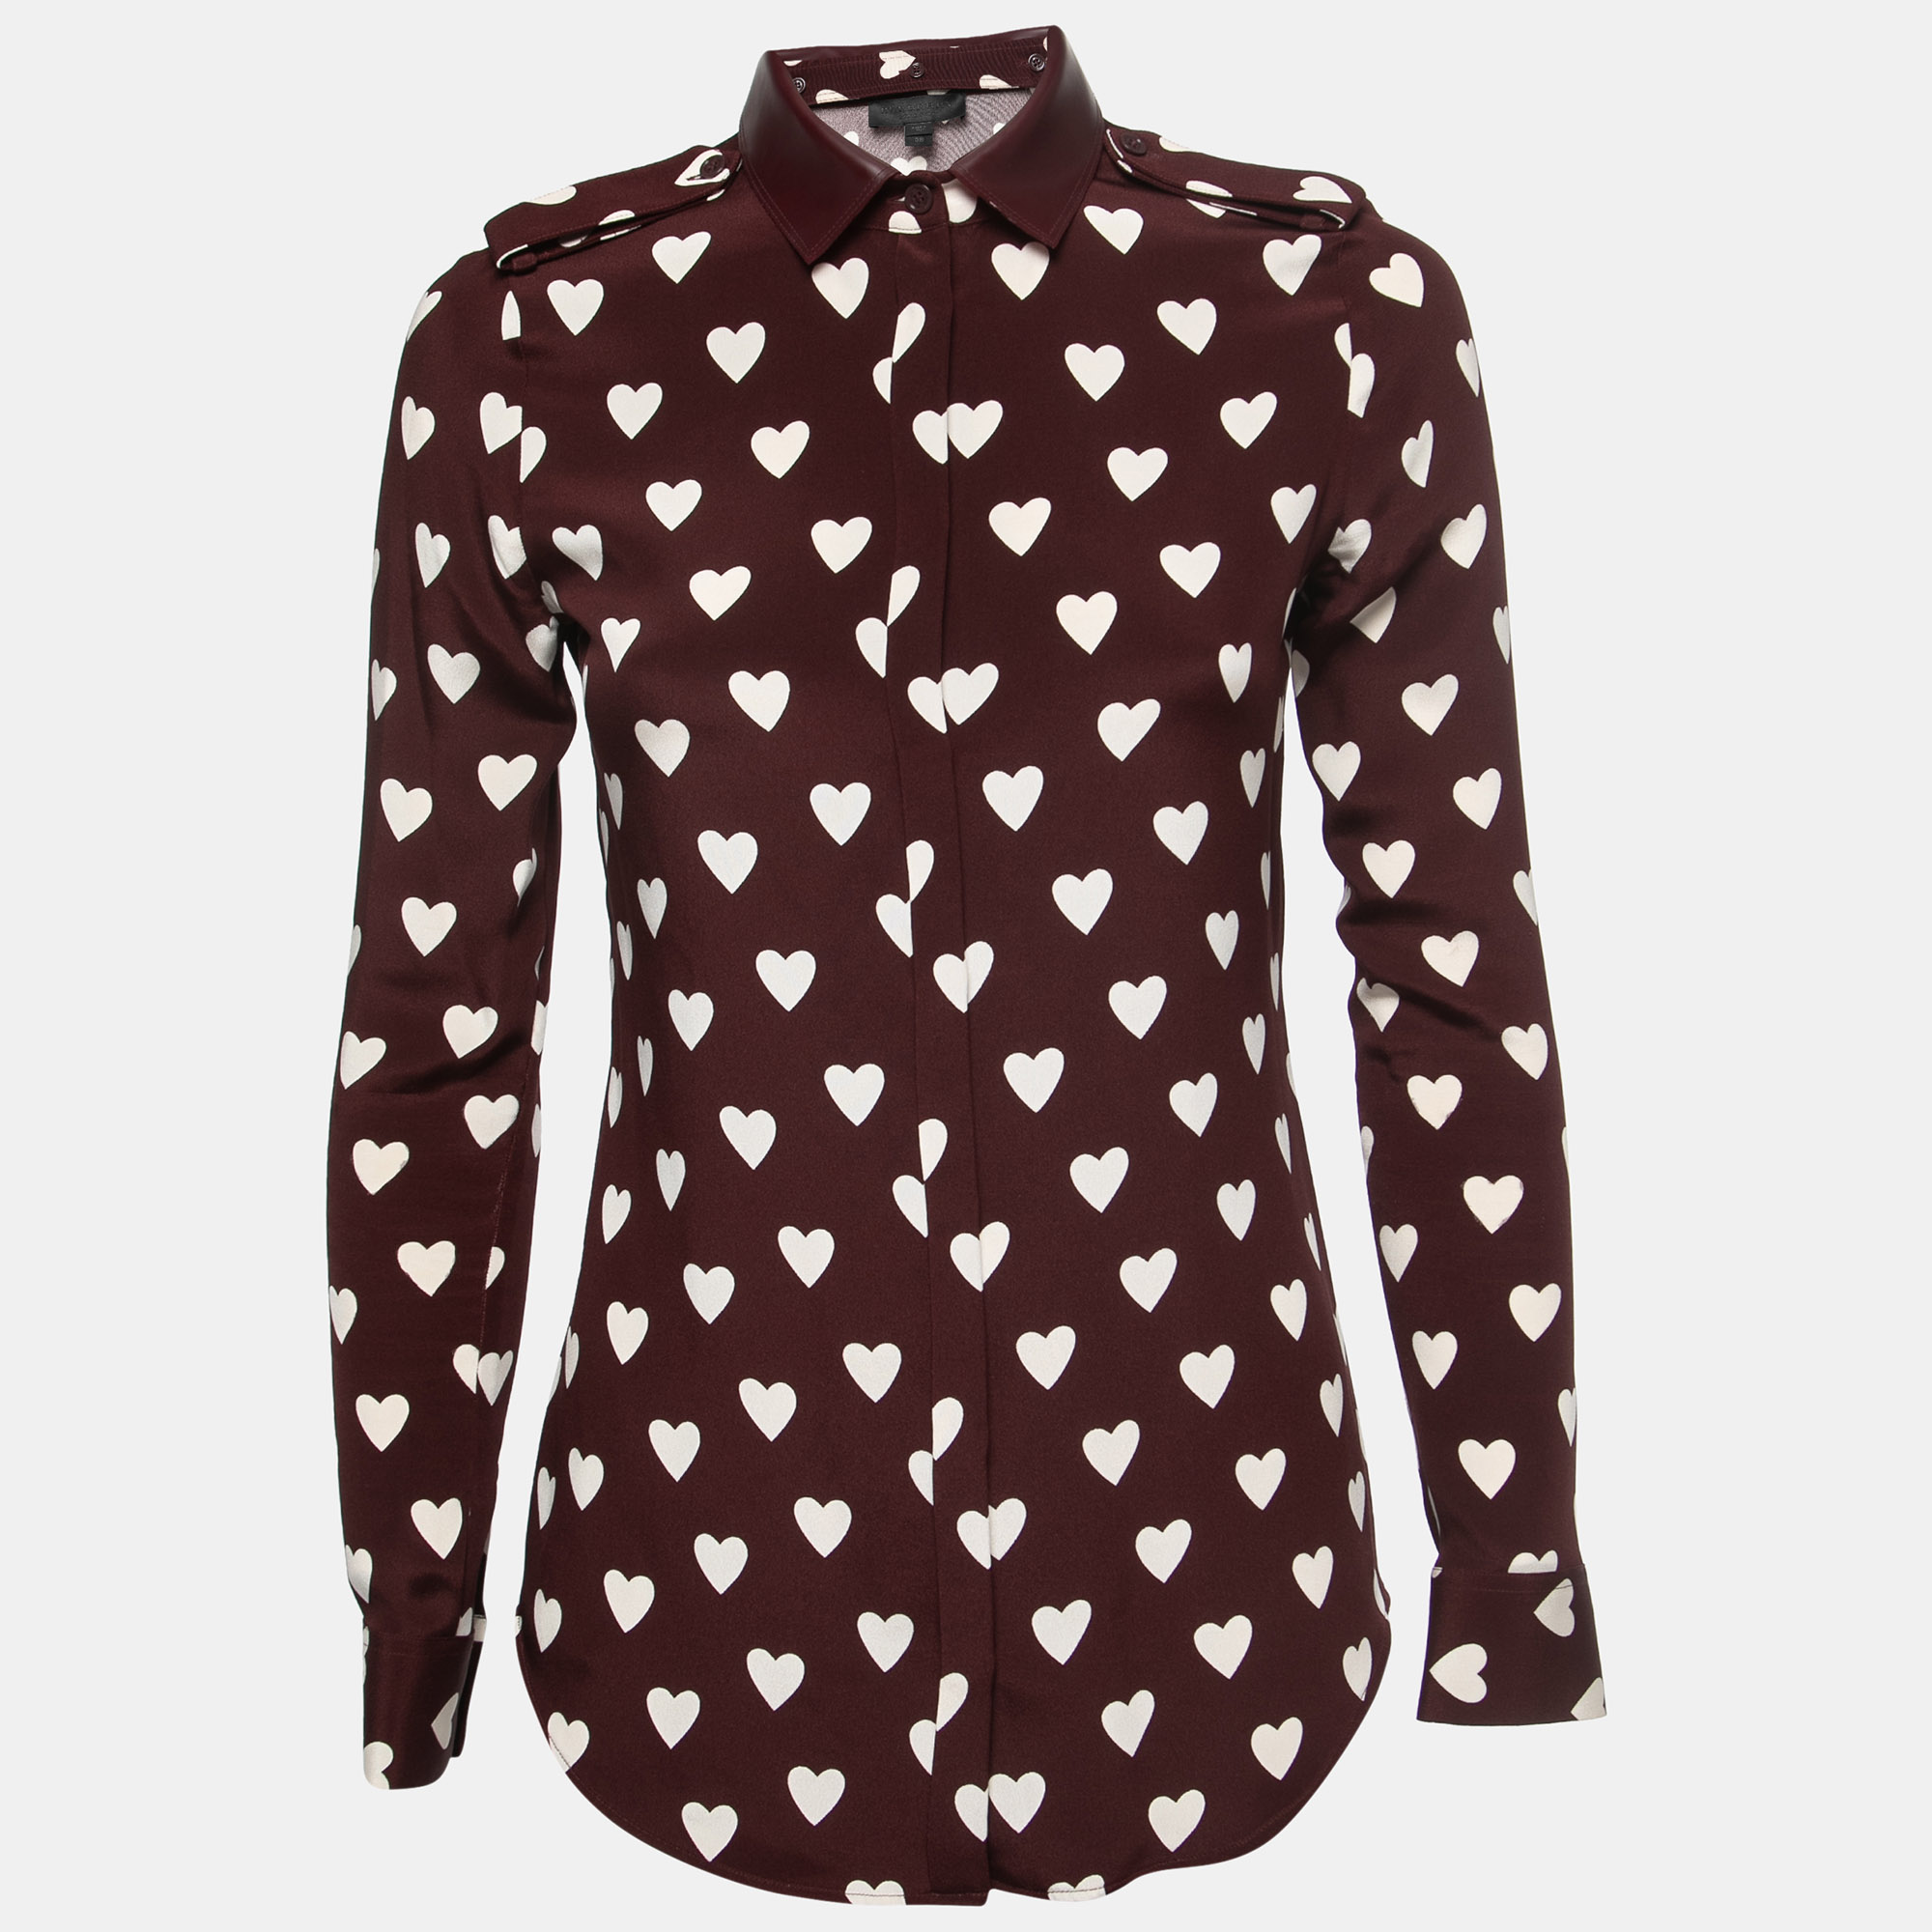 Burberry Prorsum Burgundy Heart Printed Silk Collared Shirt S